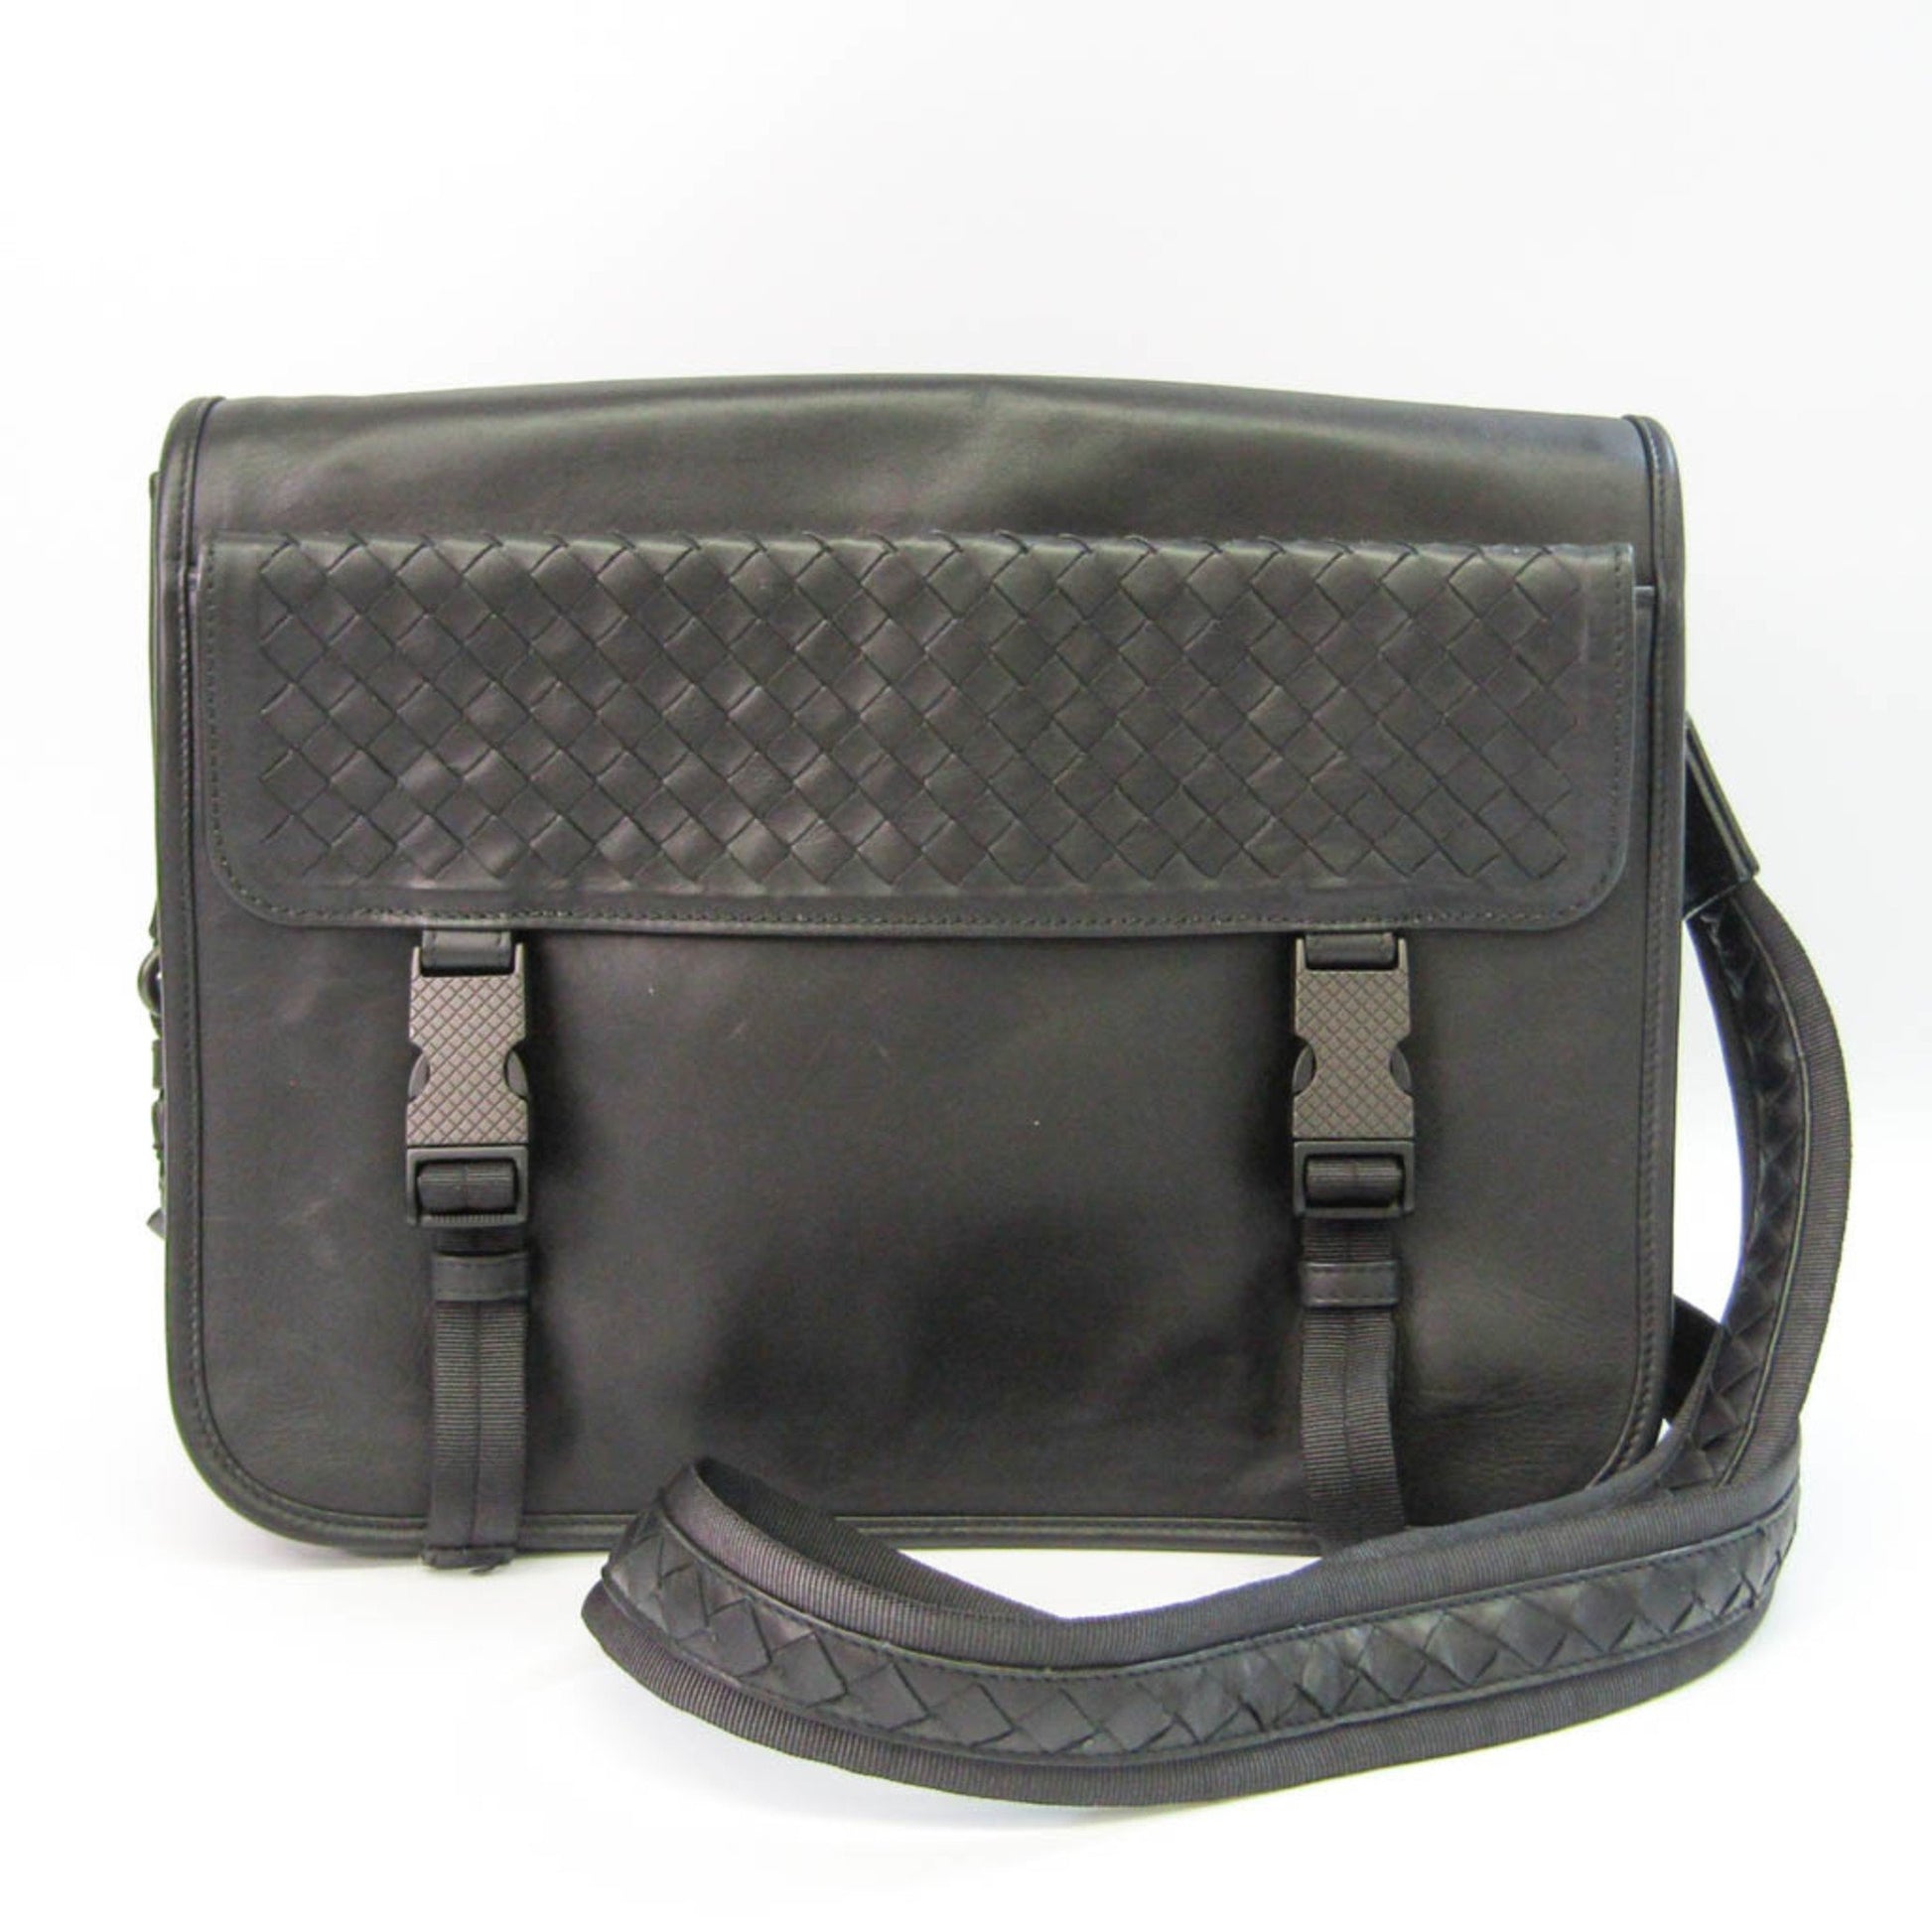 Intrecciato Leather Messenger Bag